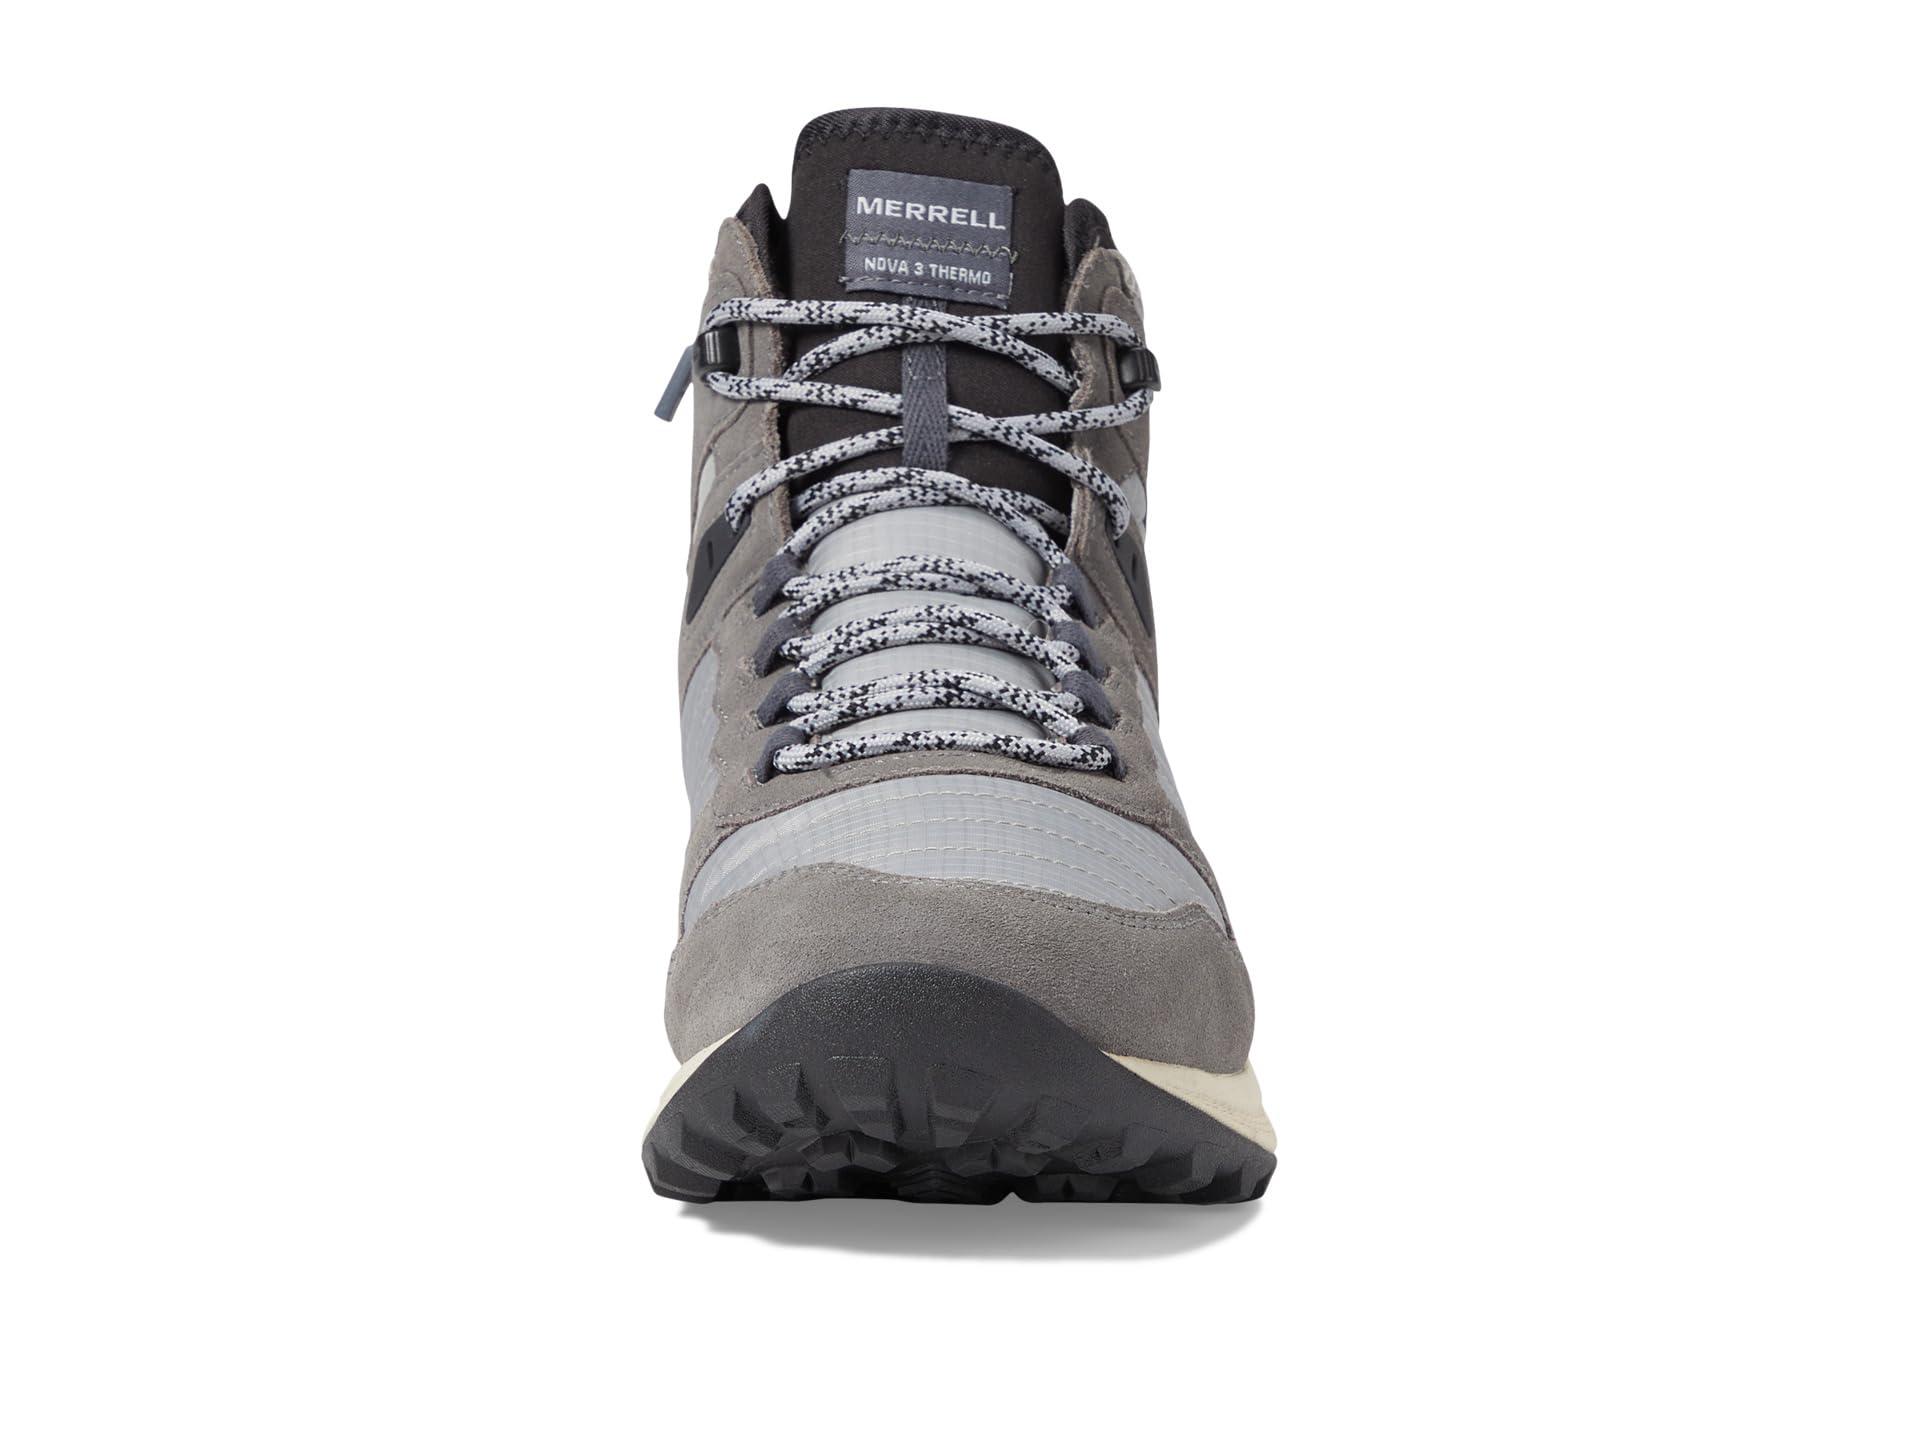 Merrell Men's Nova 3 Hiking Shoes